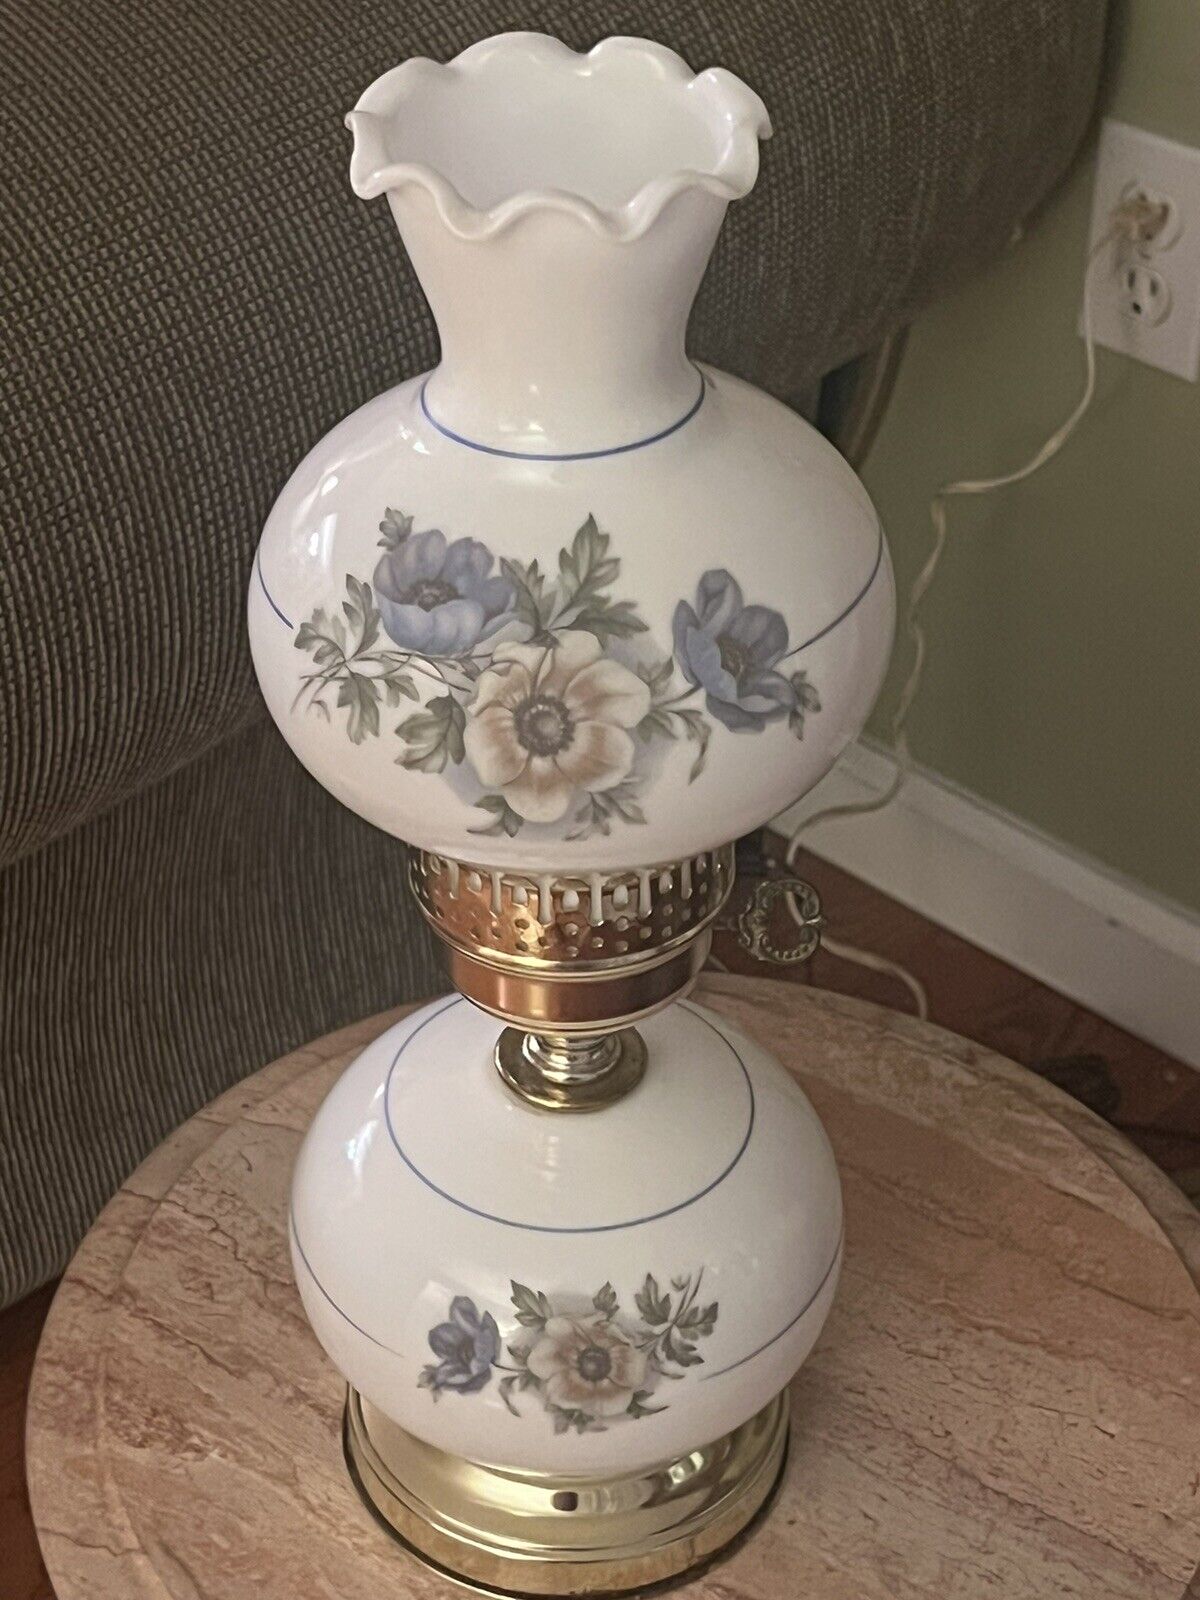 Small Hurricane Vintage Lamp